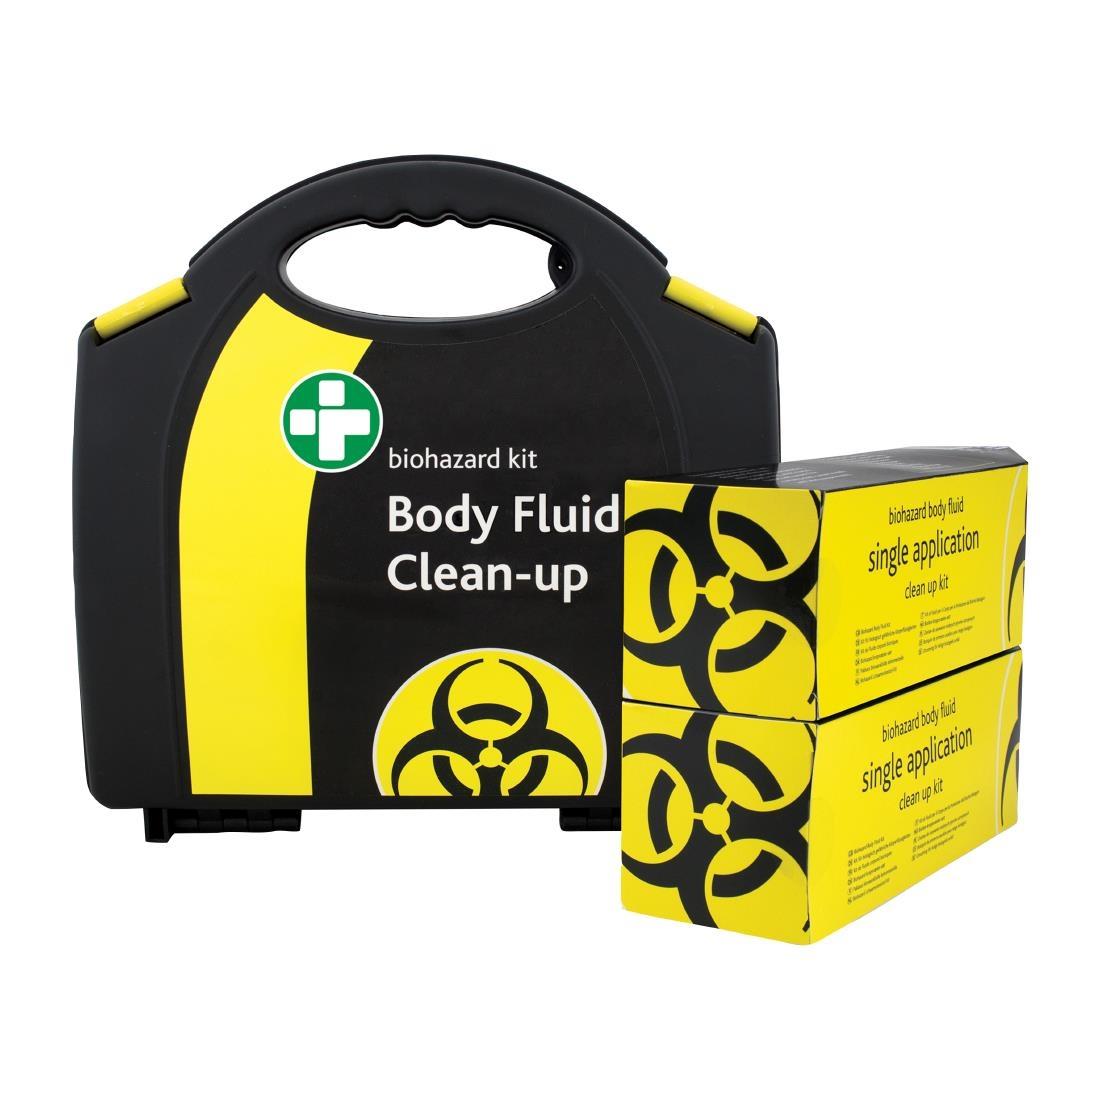 Body Fluid Kit 2 Application - CB260  - 2